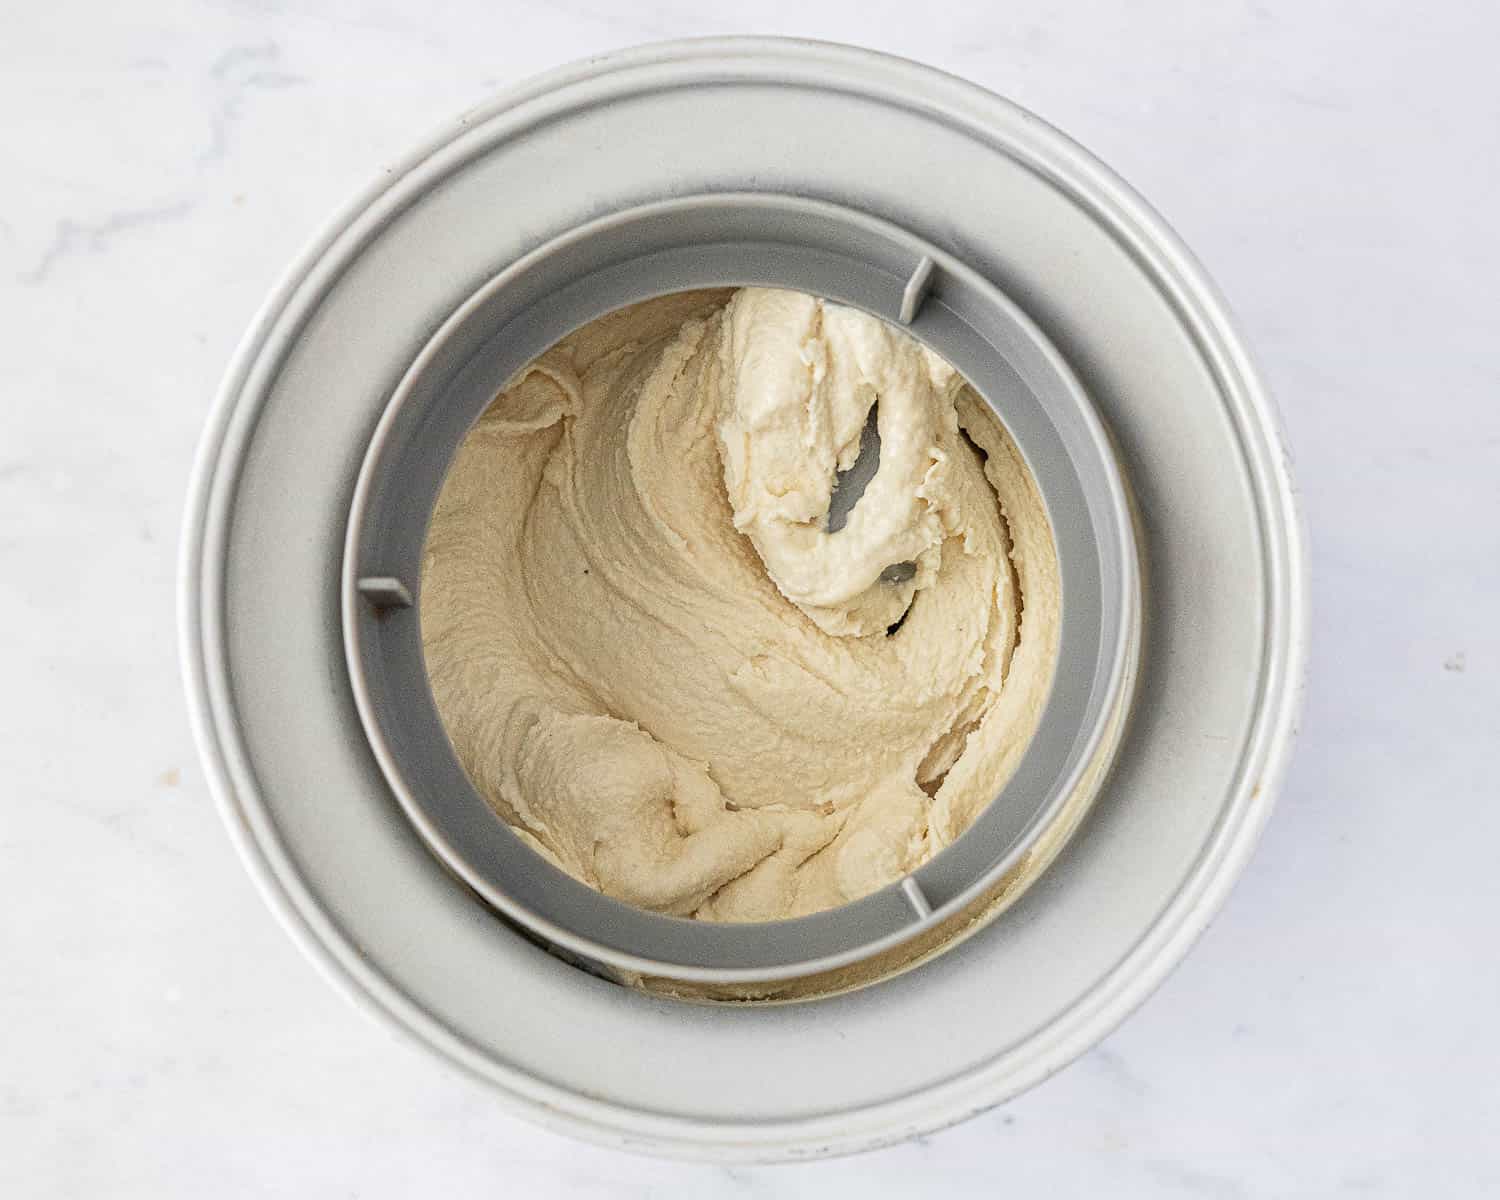 Step 5, the churned ice cream.